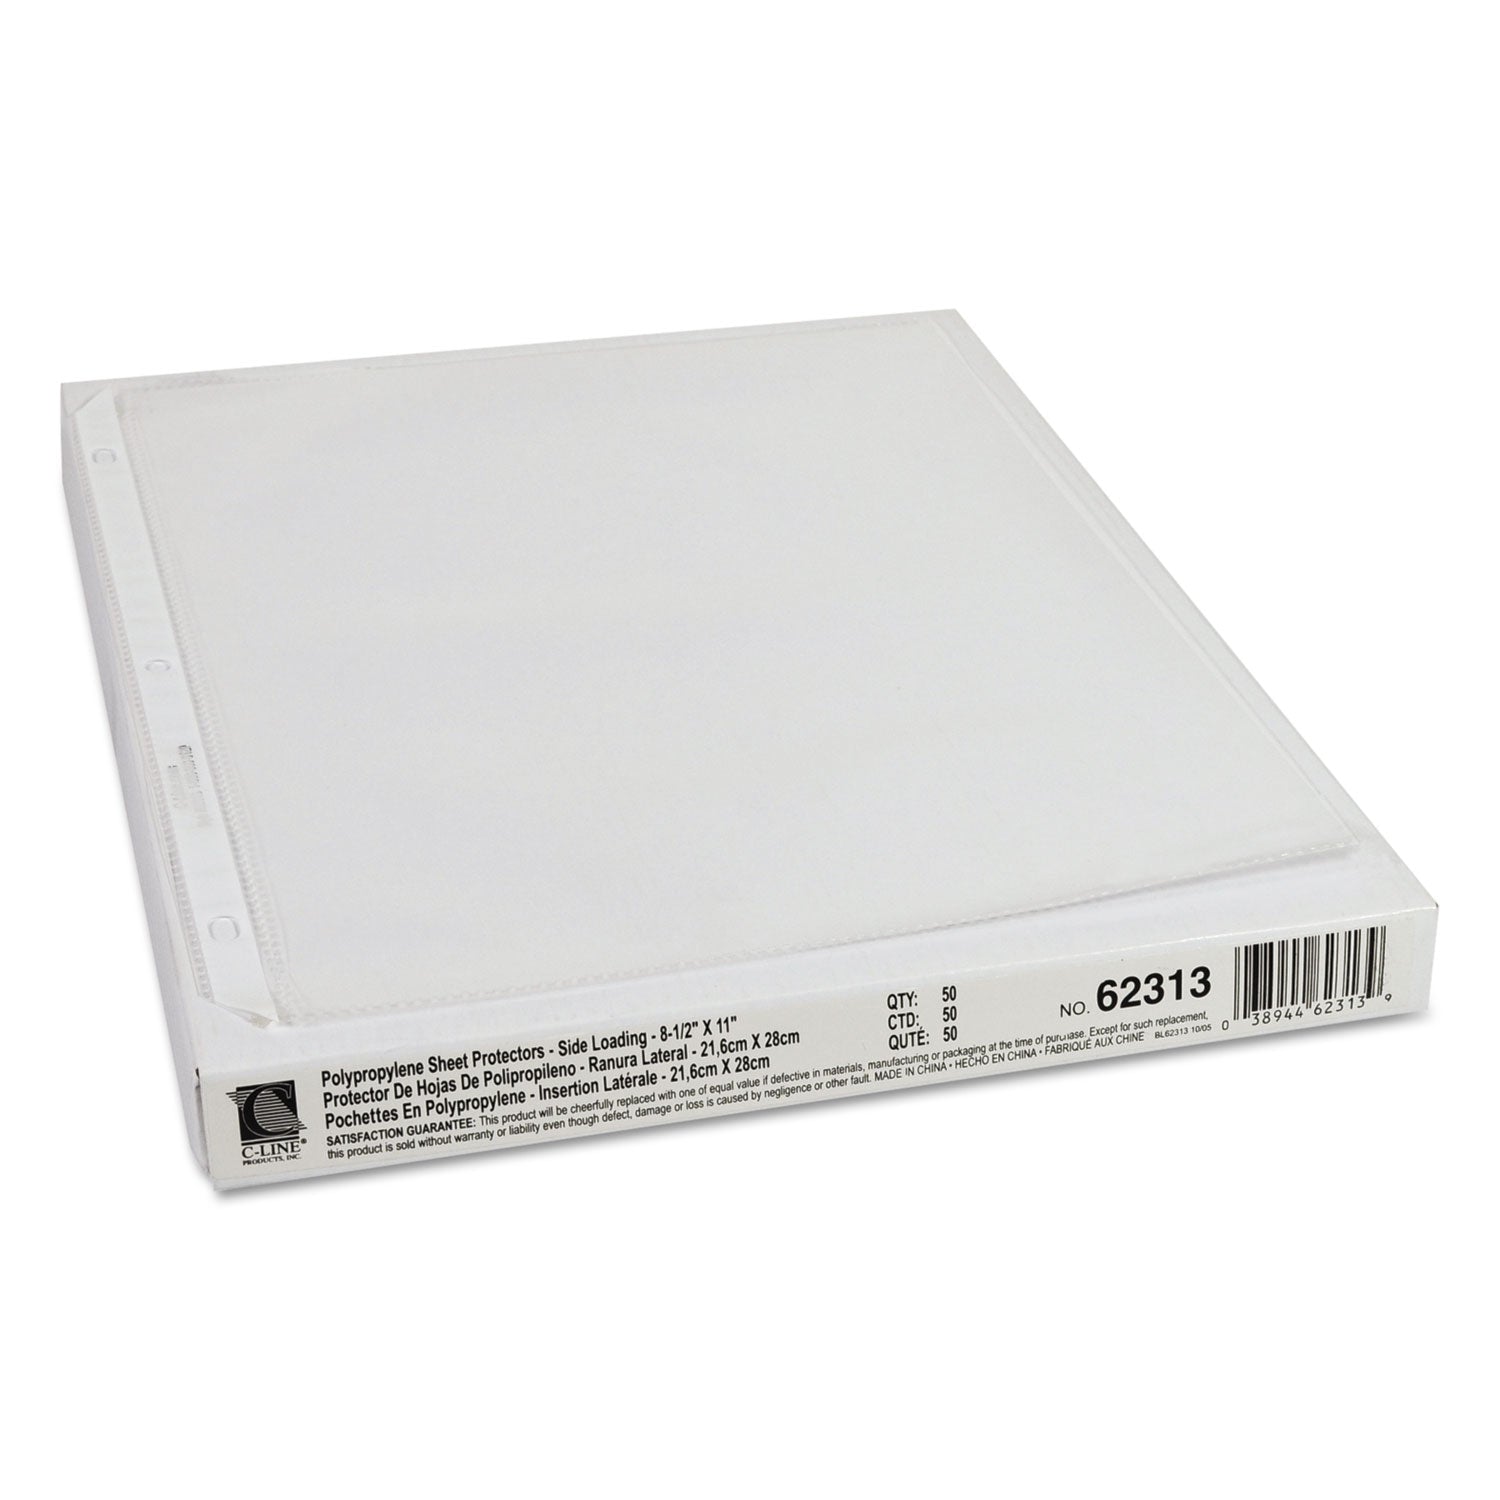 side-loading-polypropylene-sheet-protectors-clear-2-11-x-85-50-box_cli62313 - 3